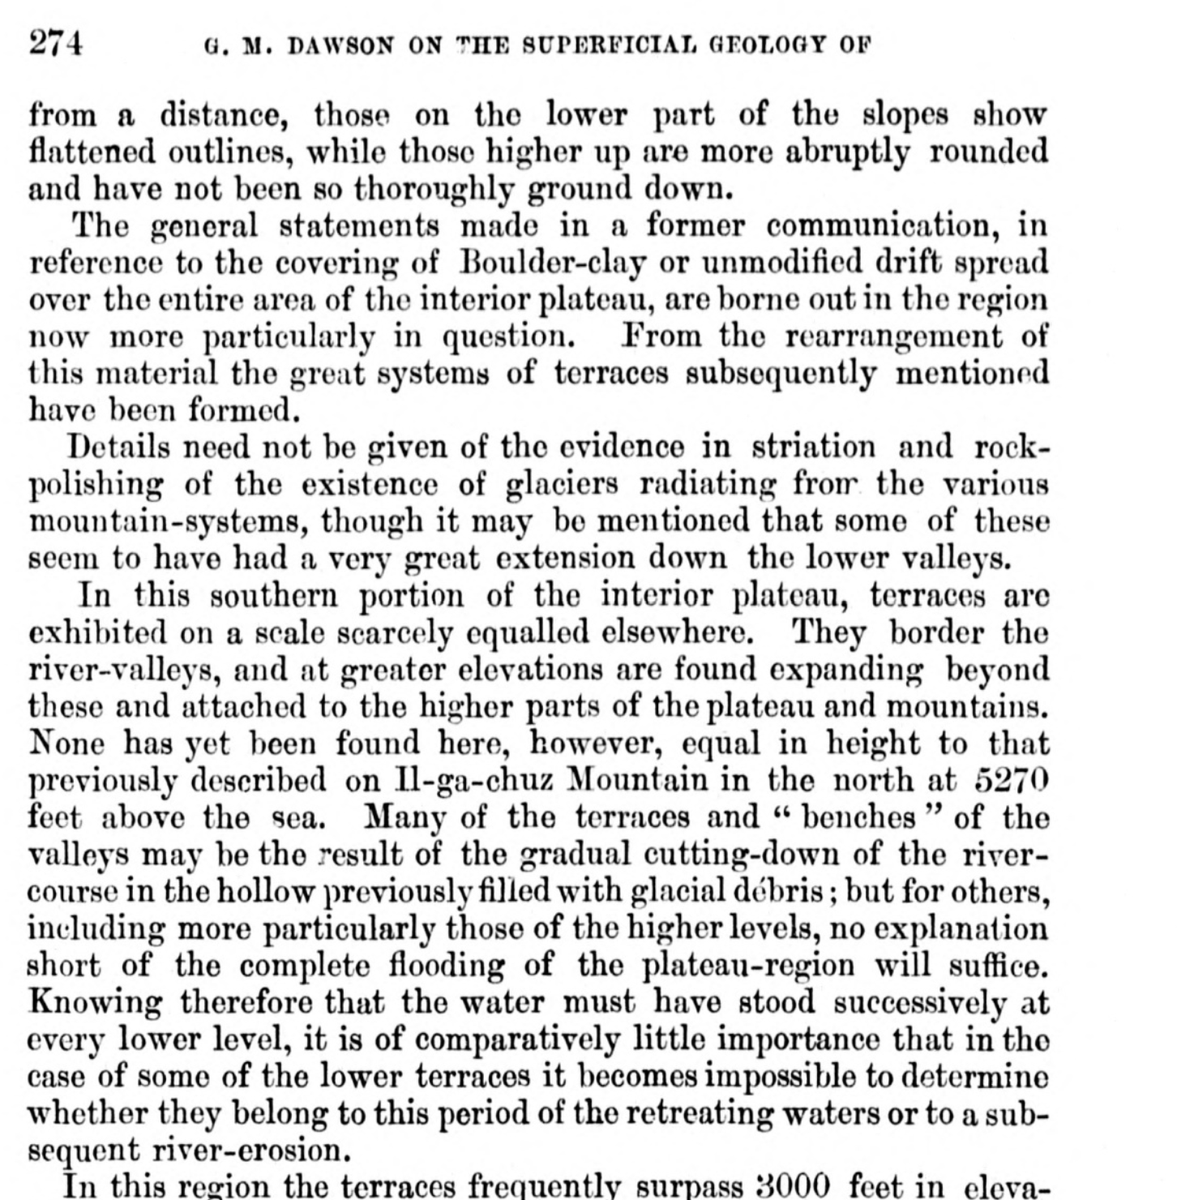 GM Dawson on remnants of glaciation in the Okanagan (1878):